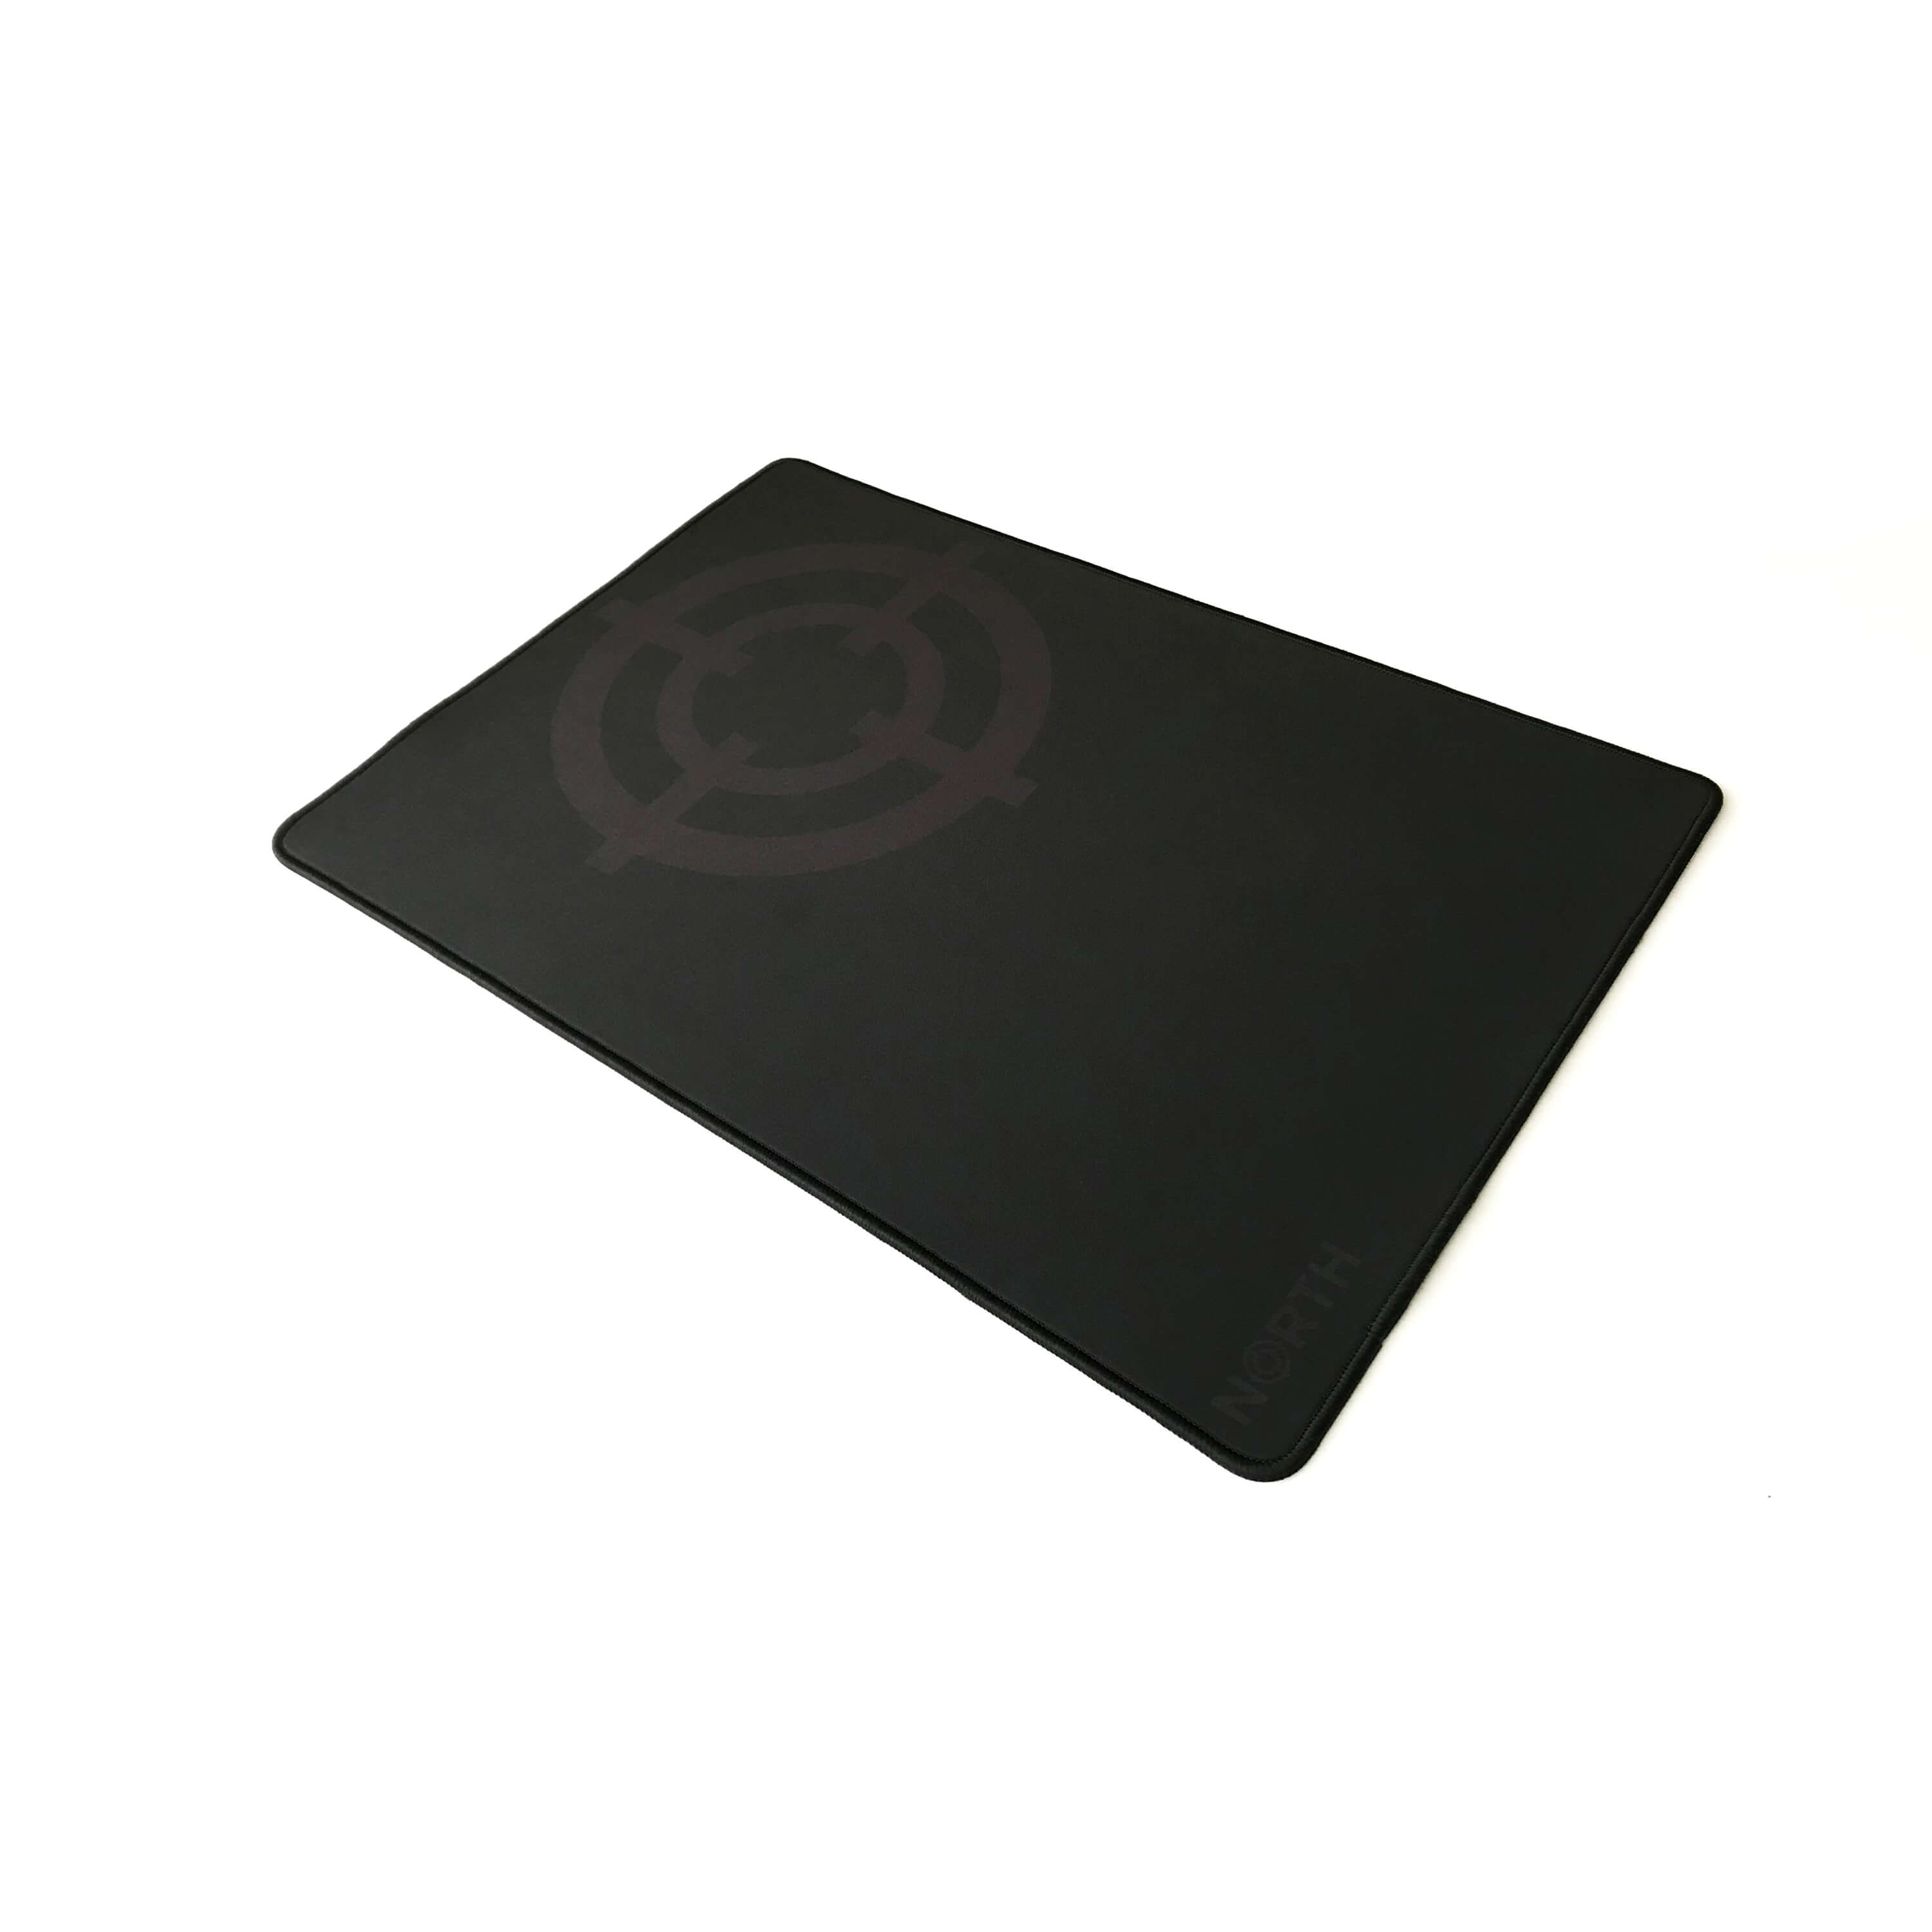 Mousepad Pro Gaming Black 500x340mm